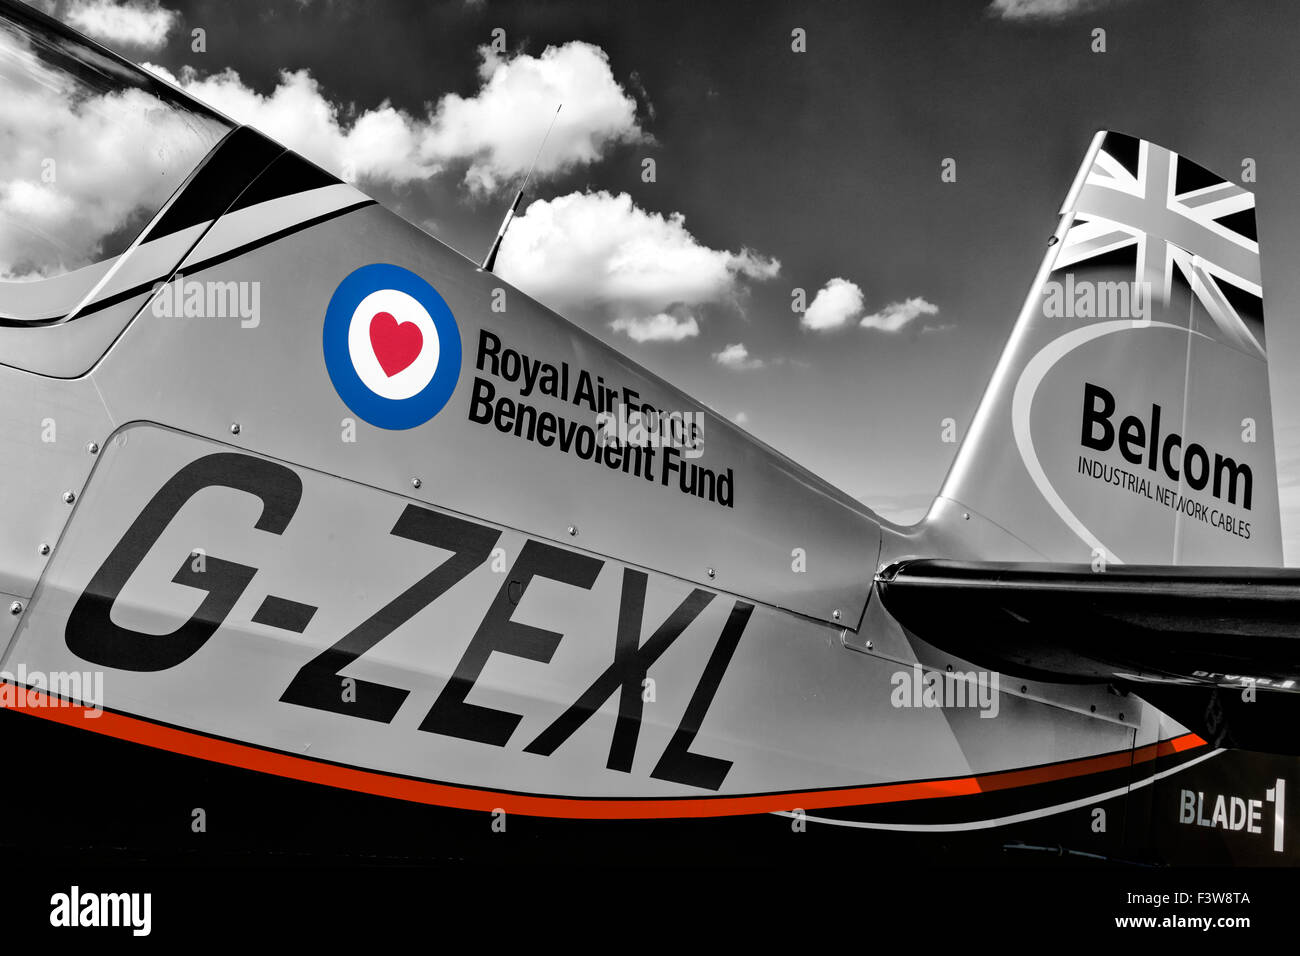 The Blades aerobatic team - Blade One - Extra Flugzeugbau E300 Stock Photo